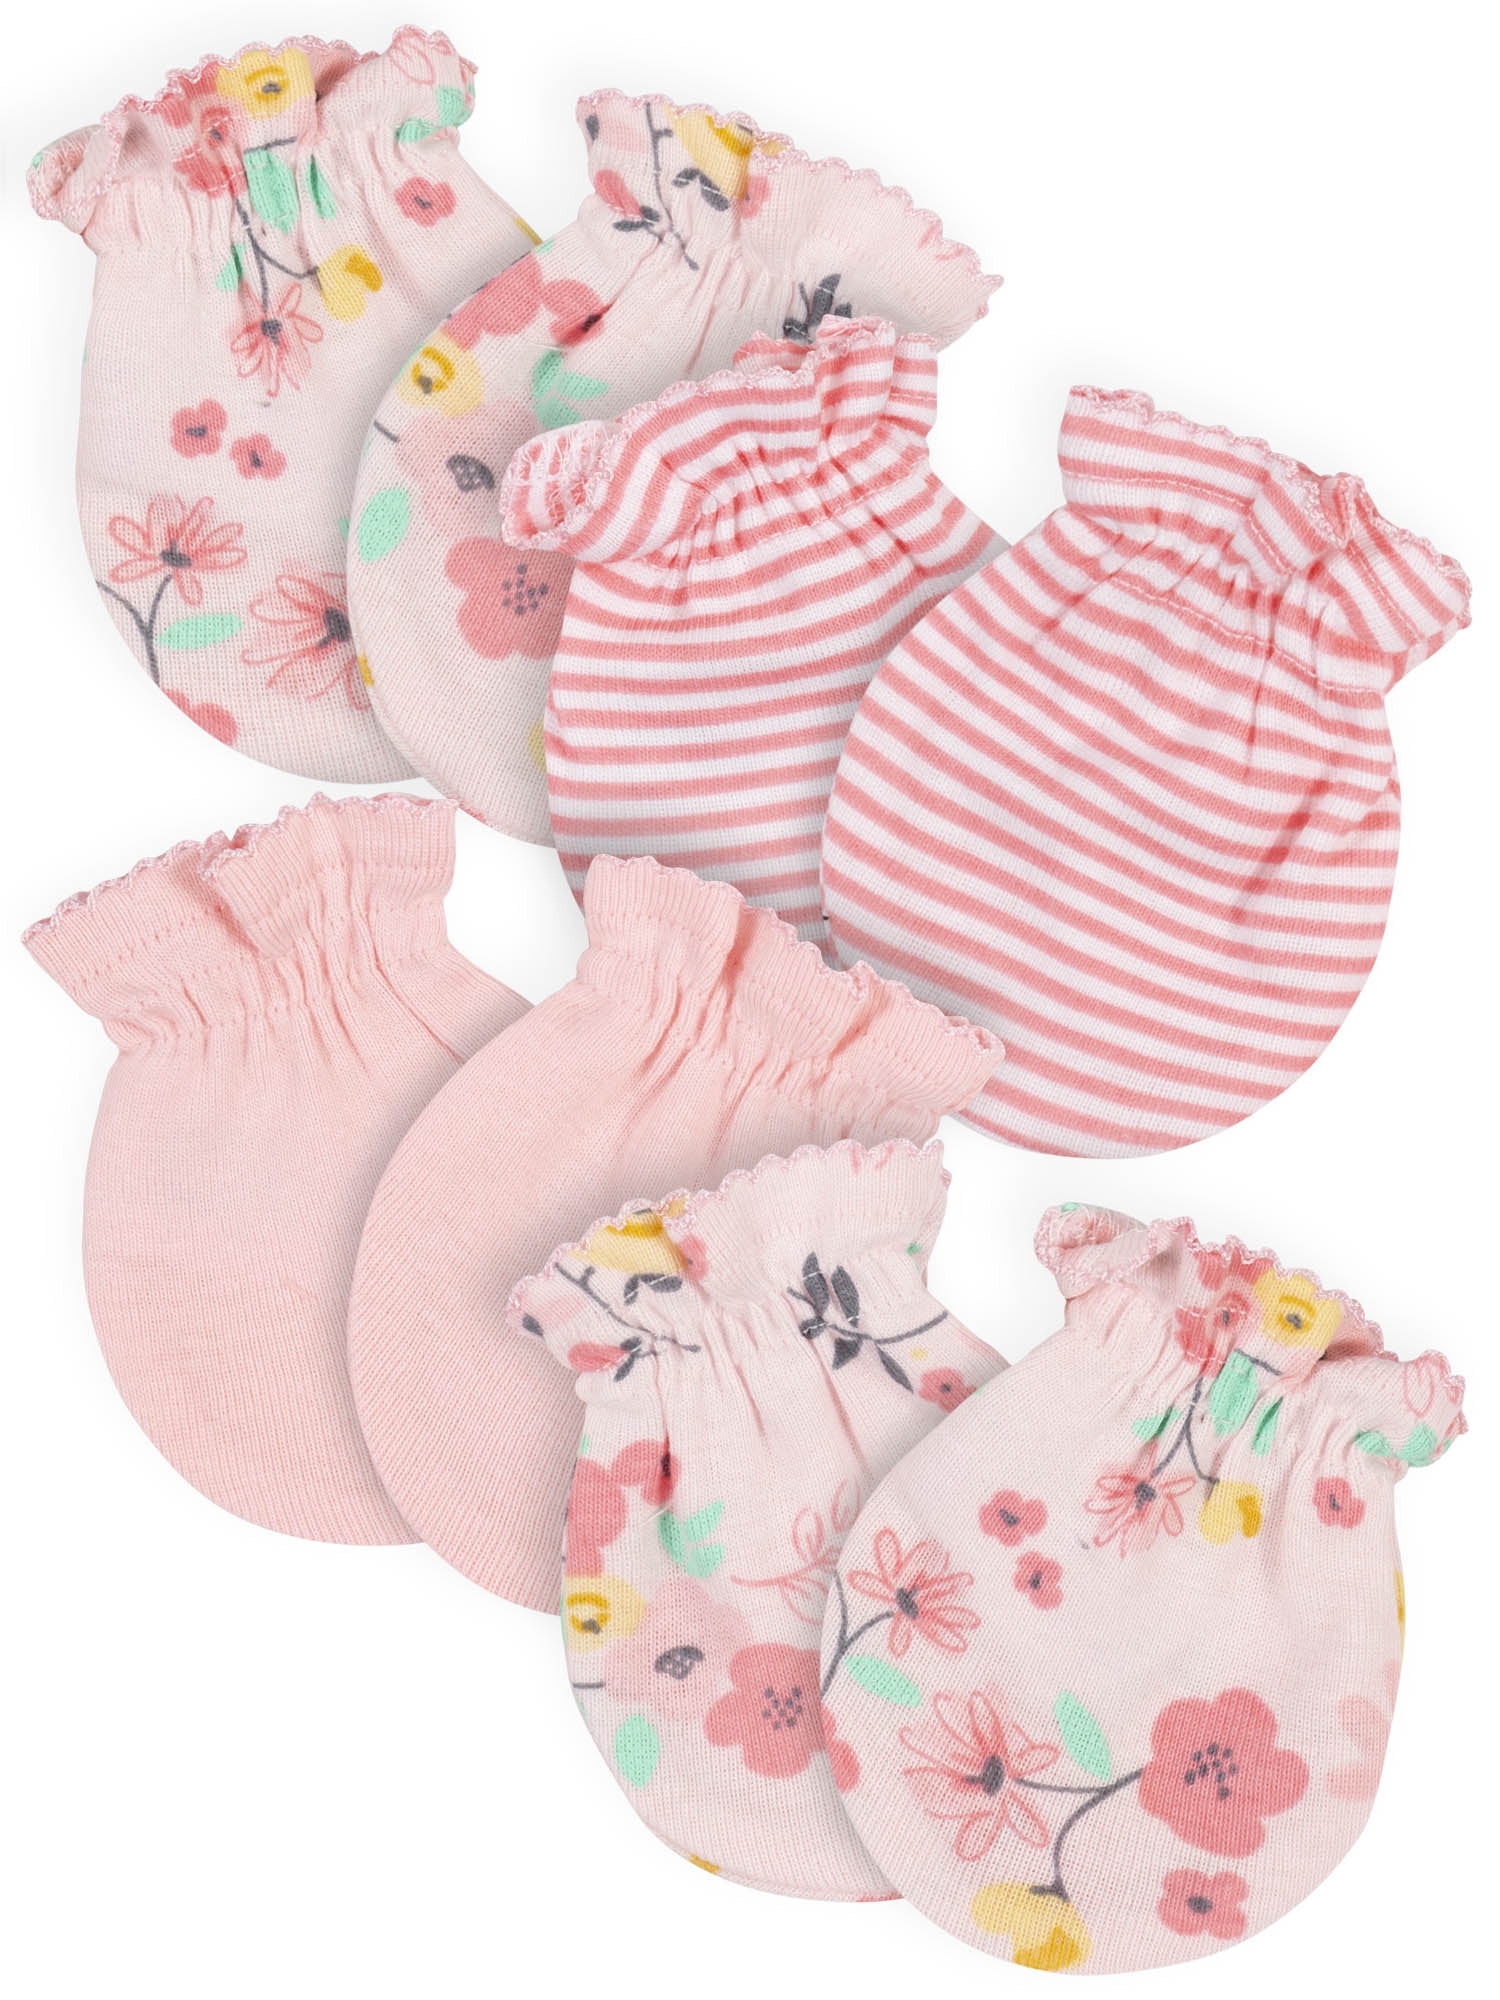 6 pairs Cotton Newborn Baby/infant No Scratch Mittens Gloves Pink Carter's